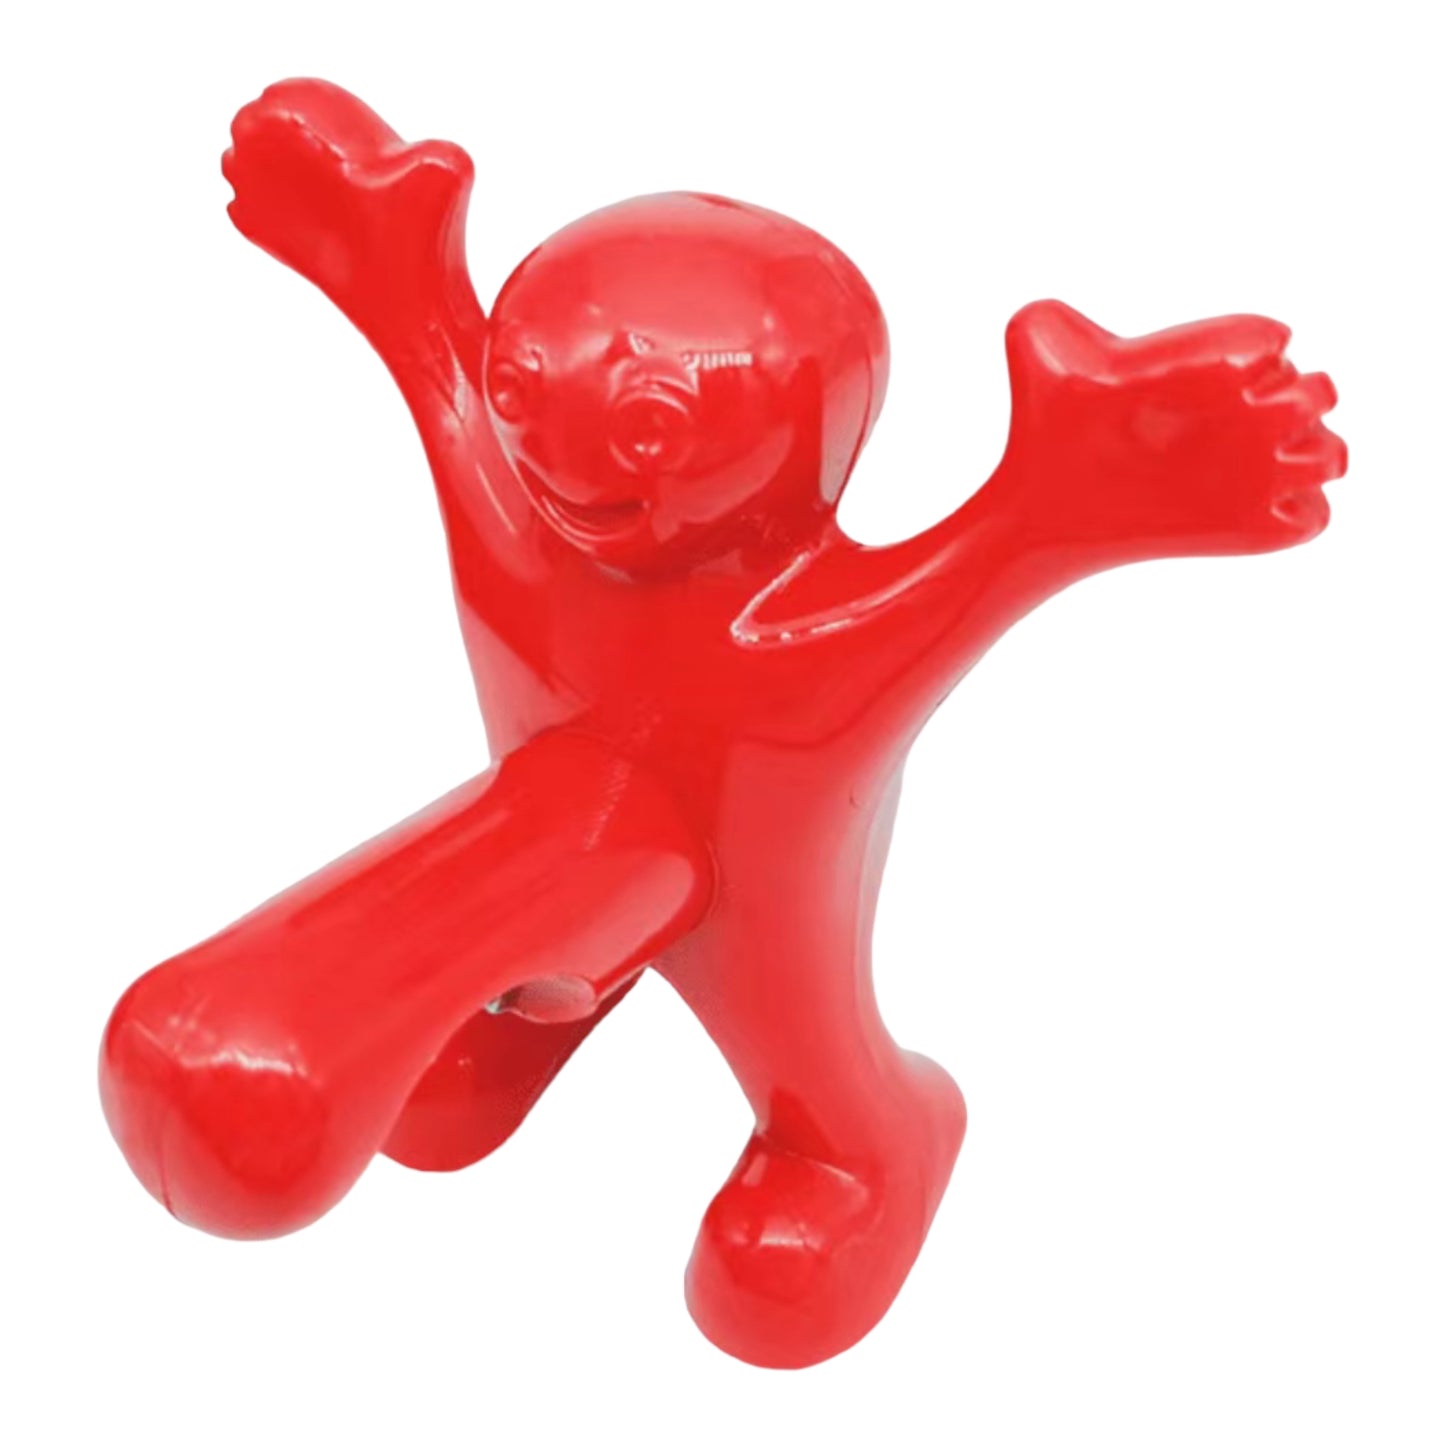 Kinky Pleasure - T014 - Man With Penis As Bottle Opener - 3 Models - Red